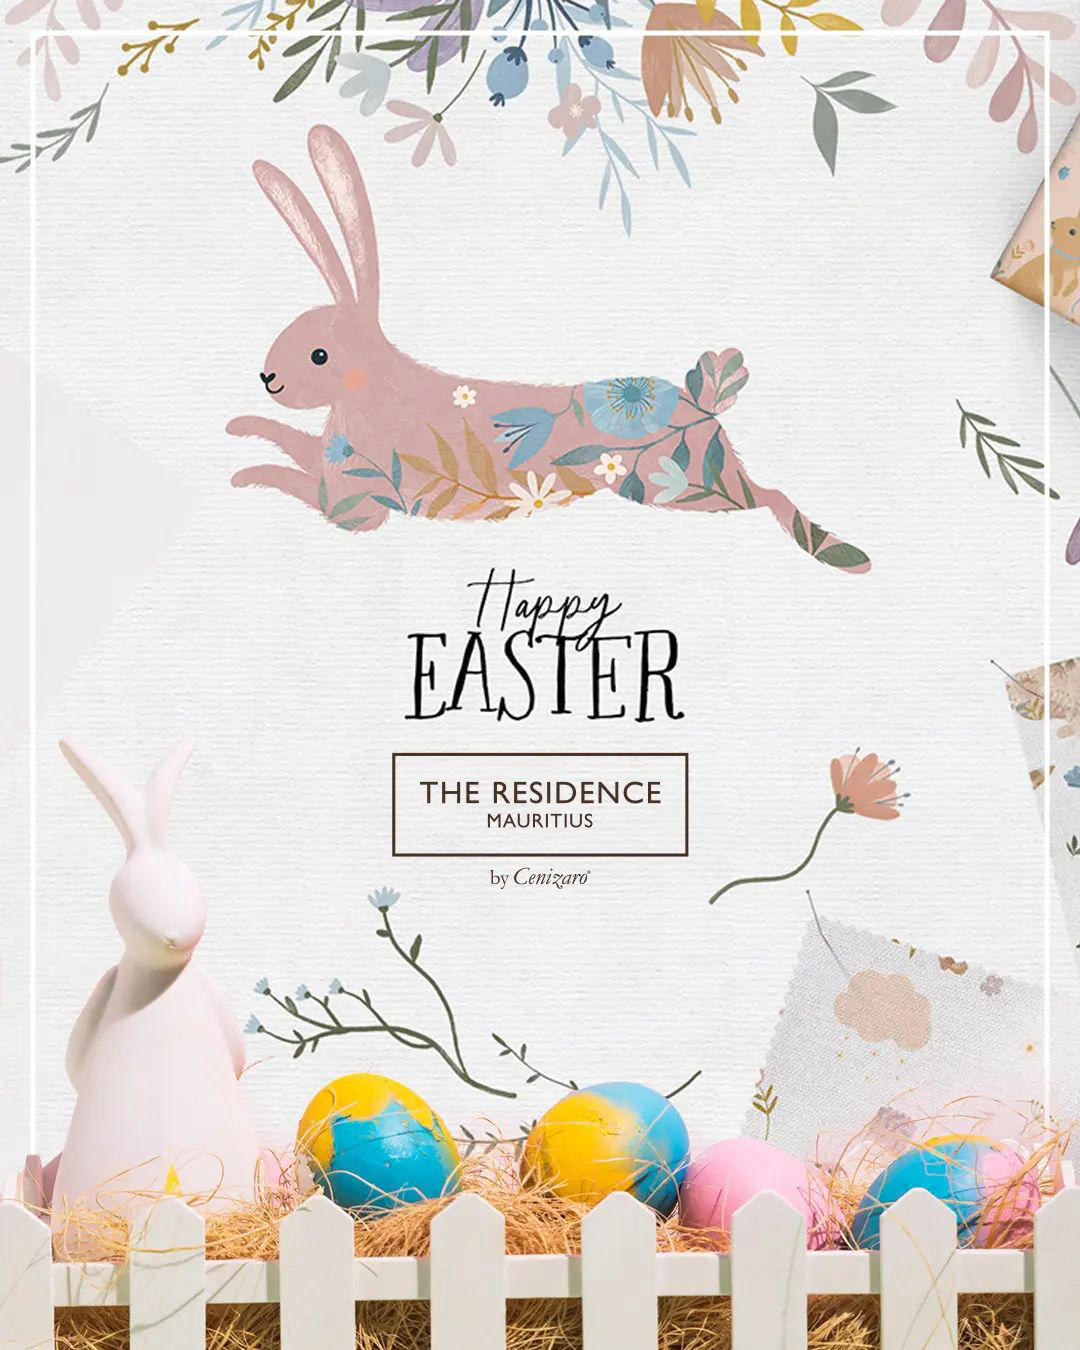 May the Easter basket brings you surprises full of joy